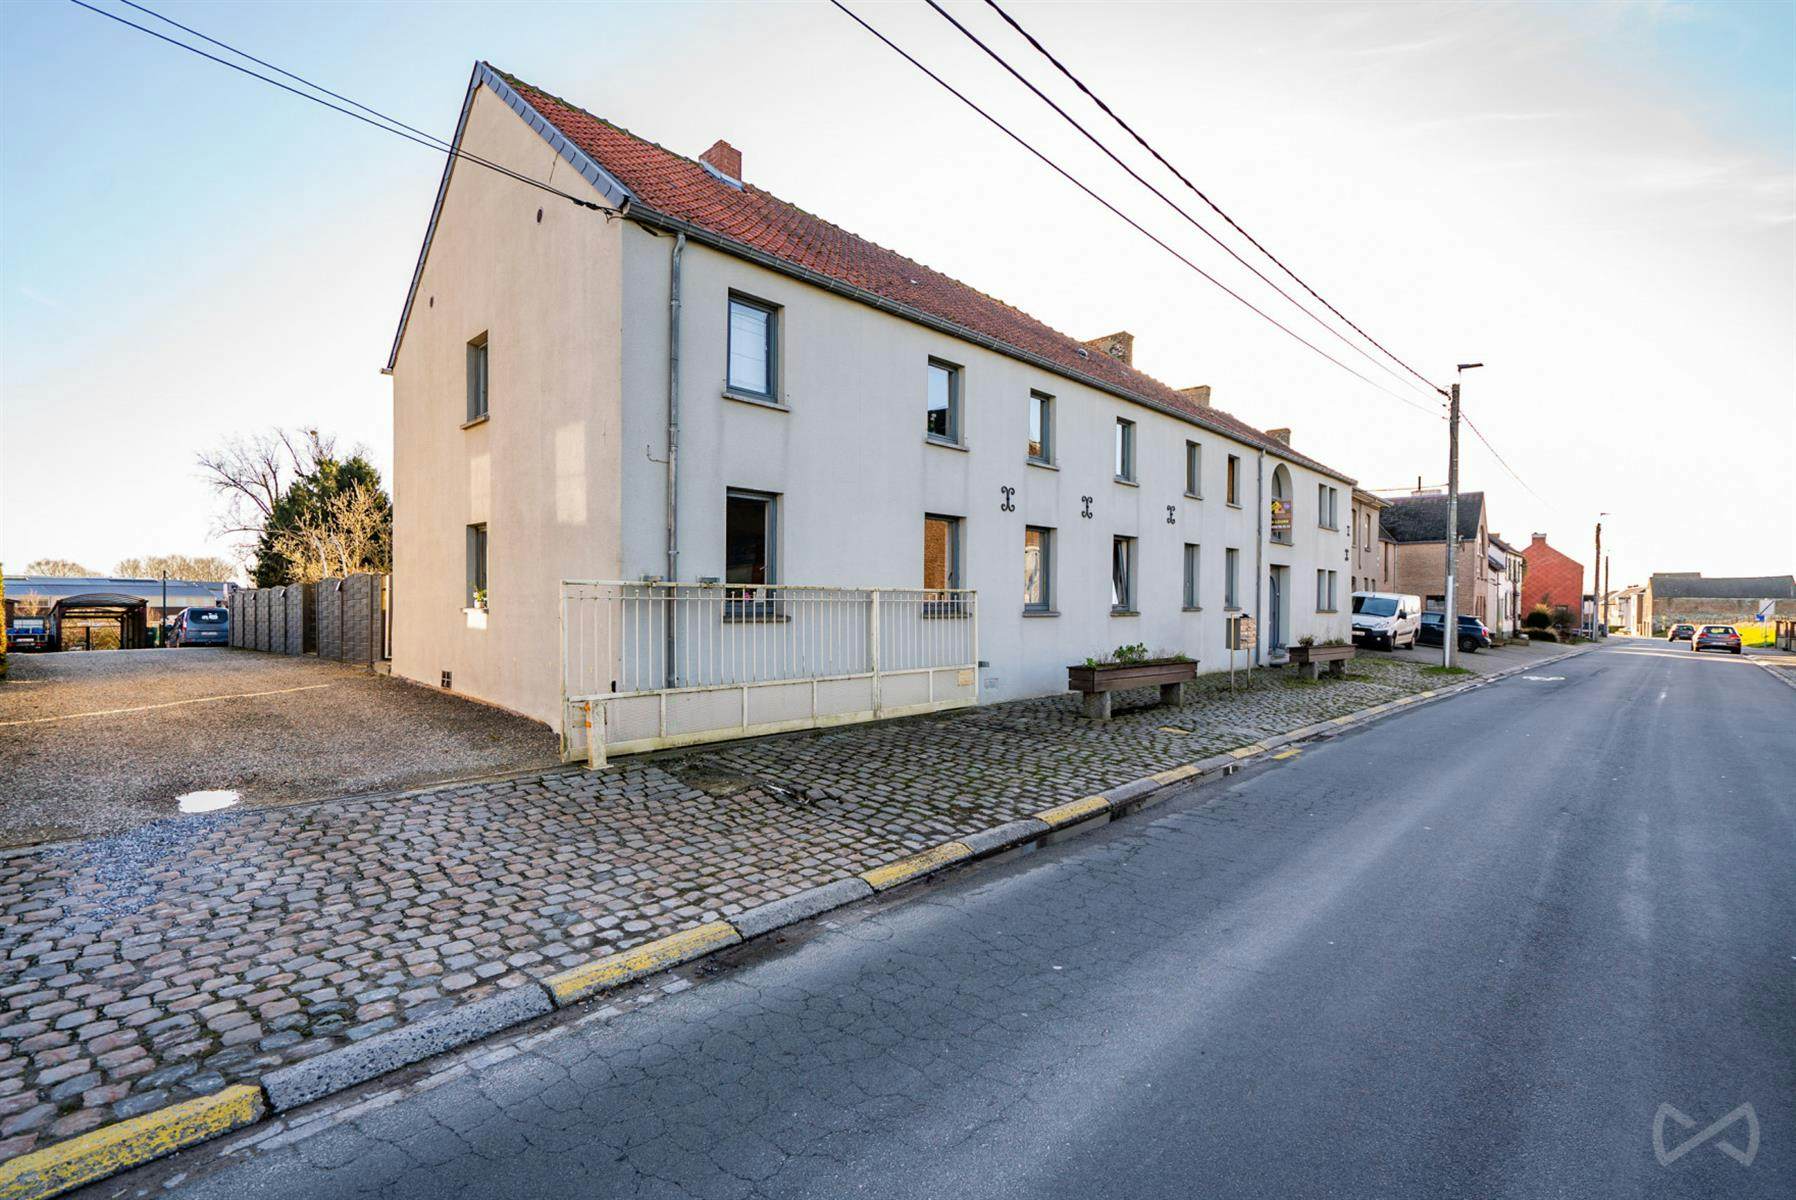 Foto 3 van 4 van Appartement met twee slaapkamers in Walhain Tourinnes-Saint-Lambert